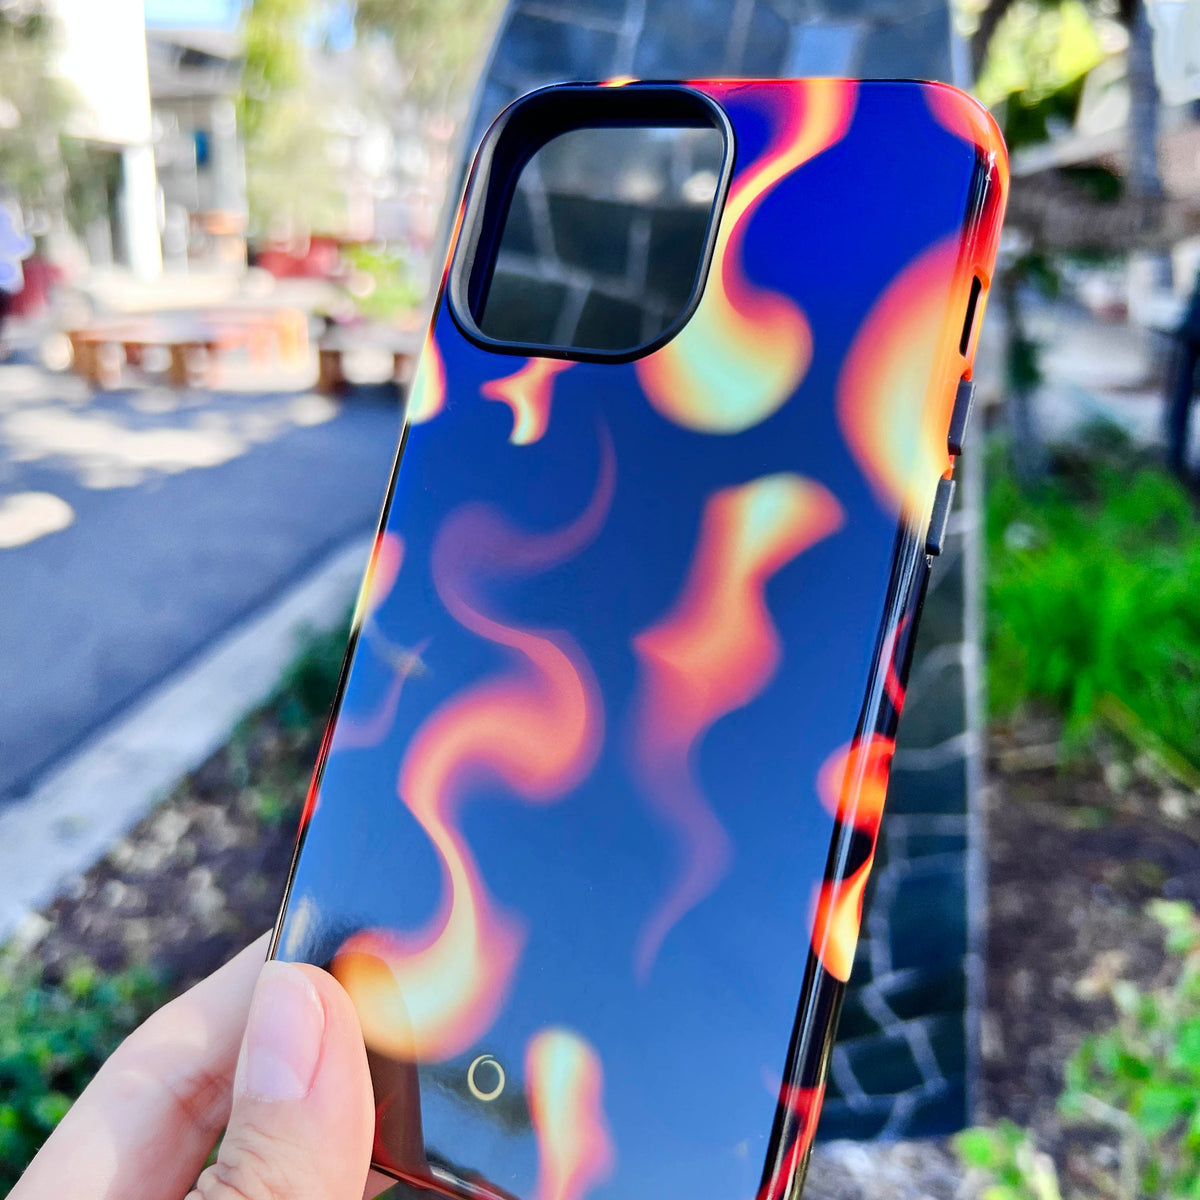 Groovy Orange Flame iPhone Case - iPhone 11